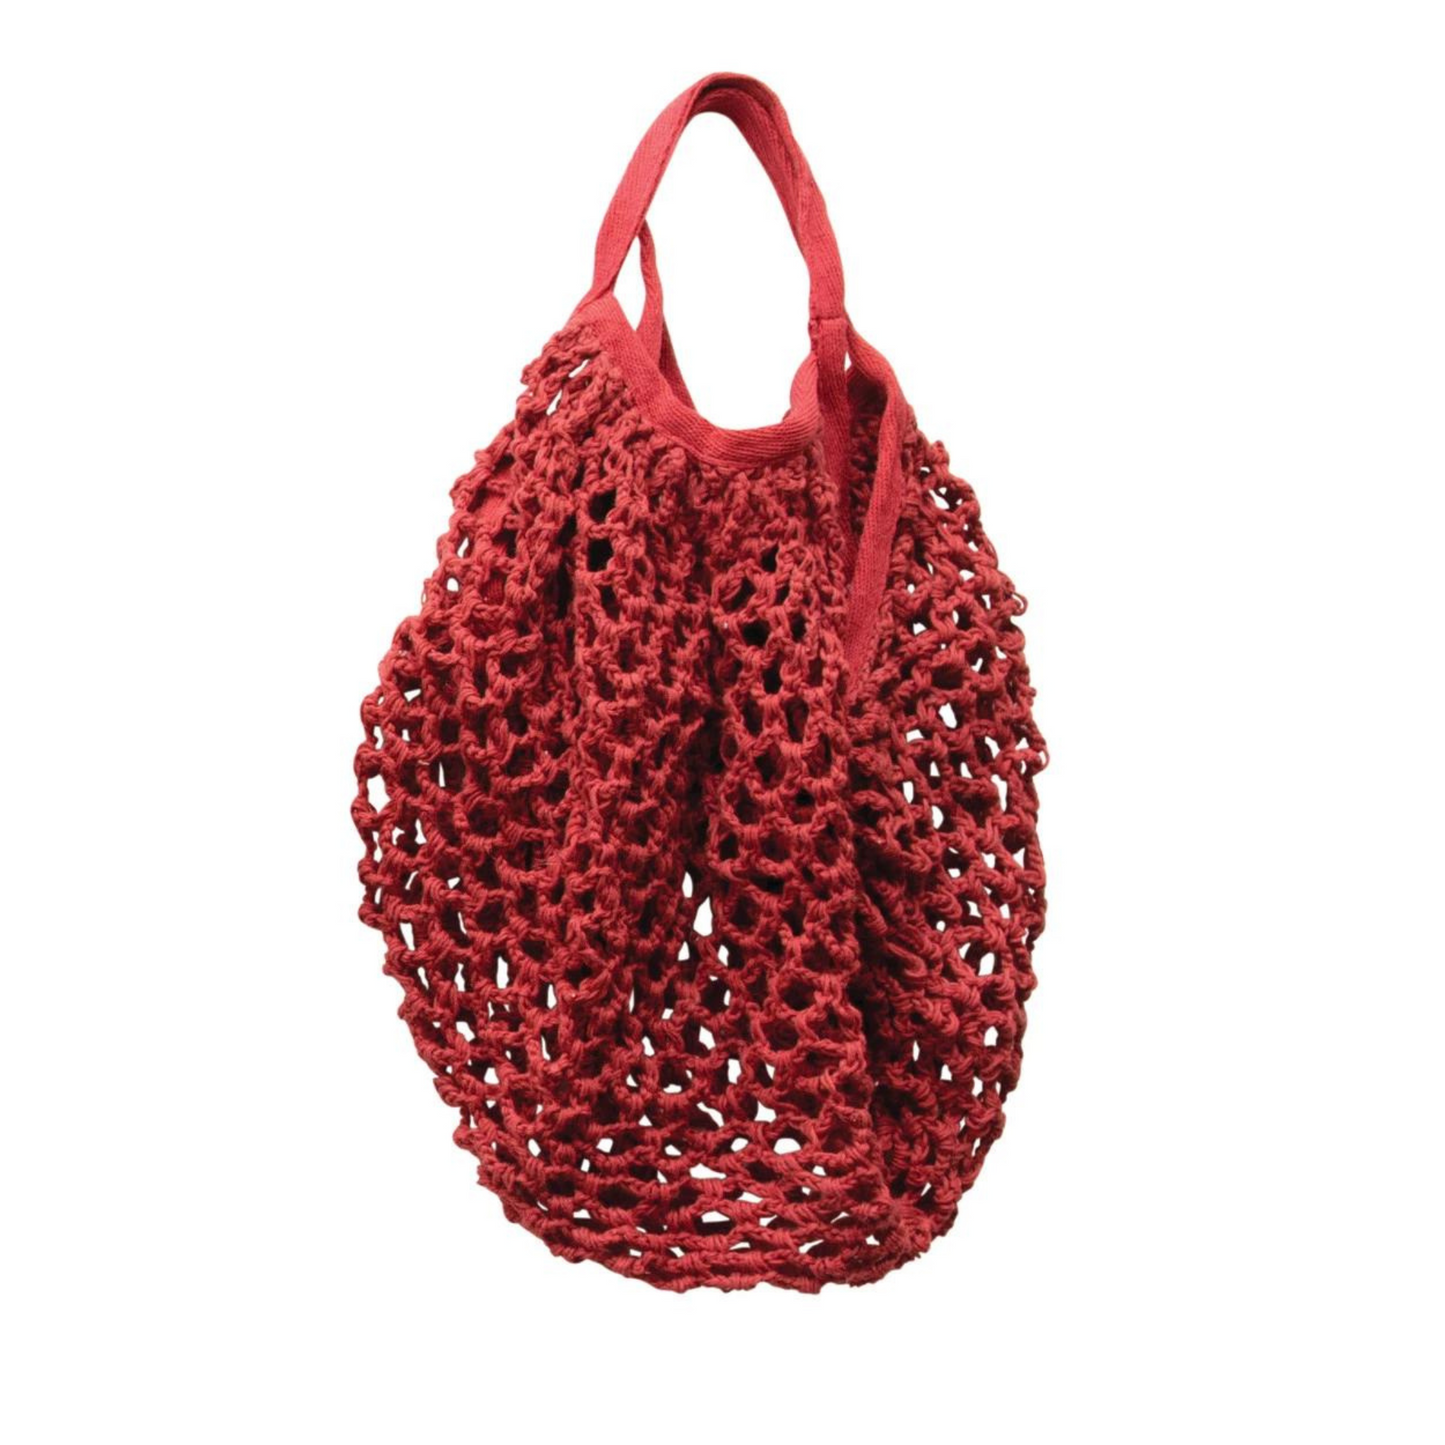 Cotton Crochet Market Bag- Maroon